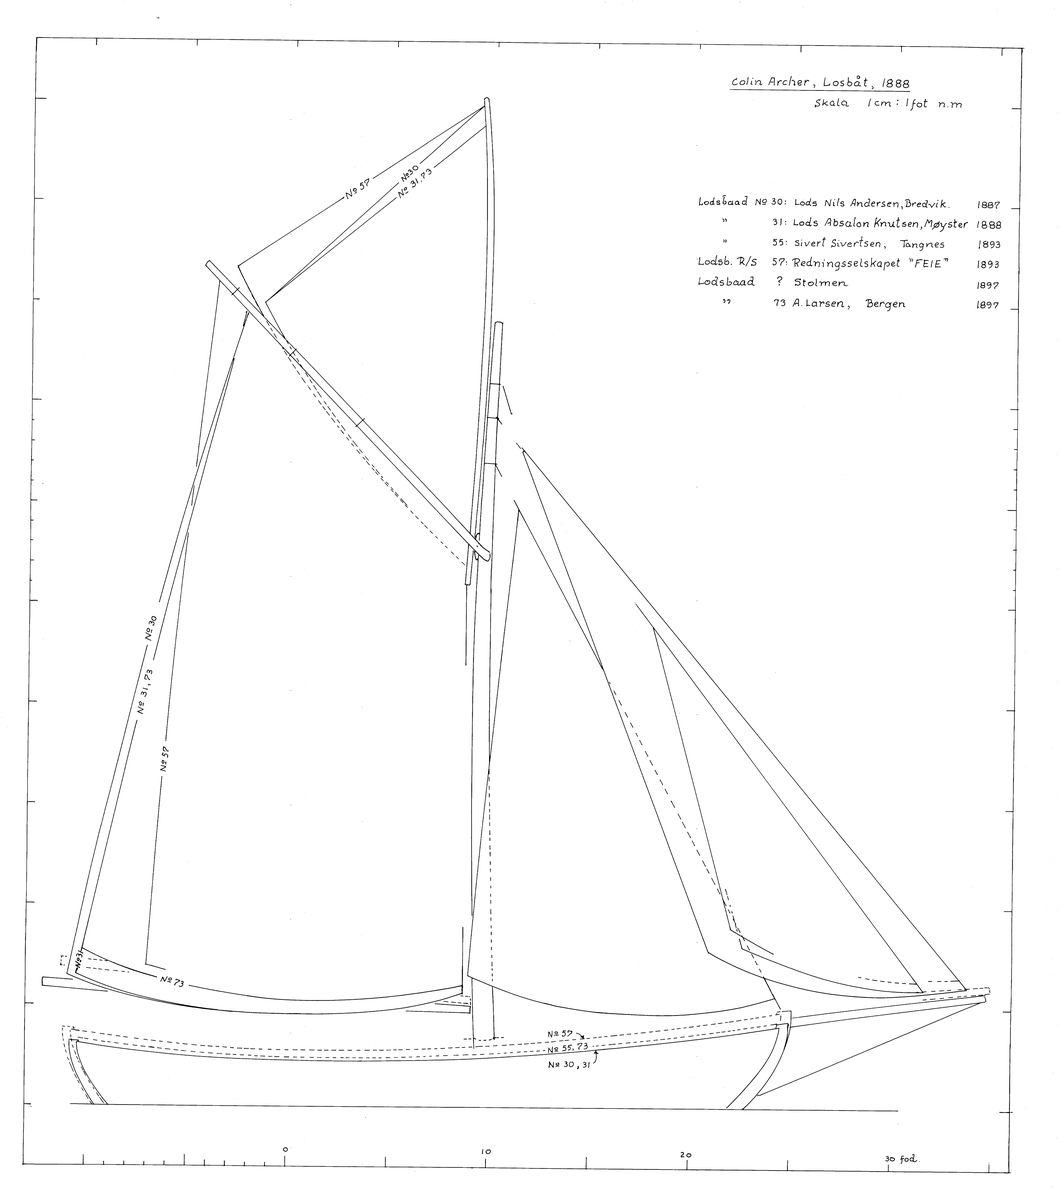 Seiltegning/sideriss med seilføring, losbåt. (kopi etter Archers originaltegninger)